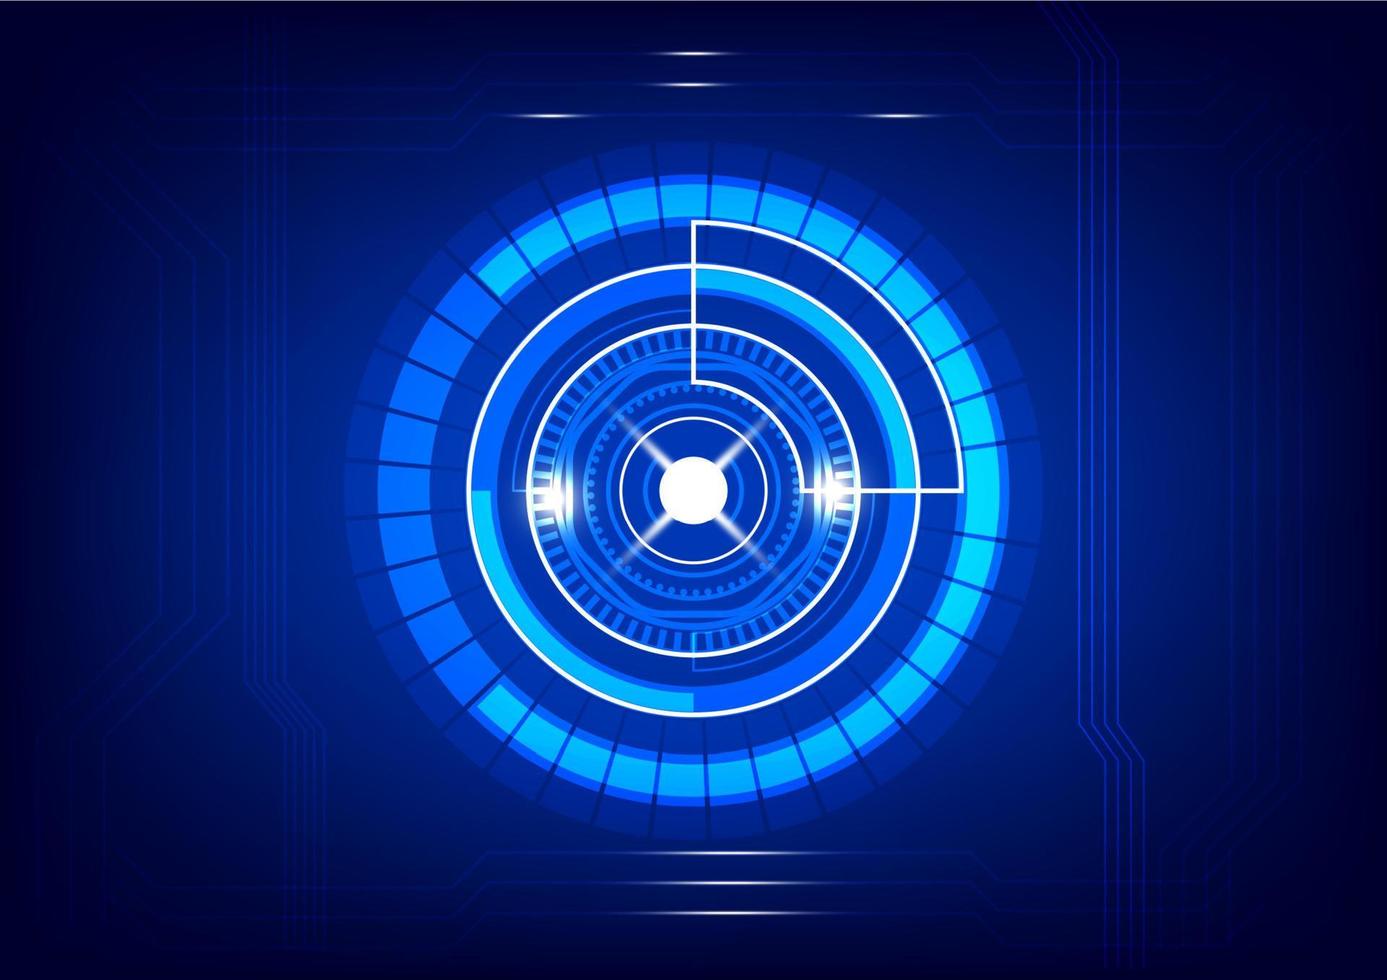 Grafikdesign Kreis Stil glühen abstrakten Hintergrund blaue Farbton Vektor-Illustration vektor